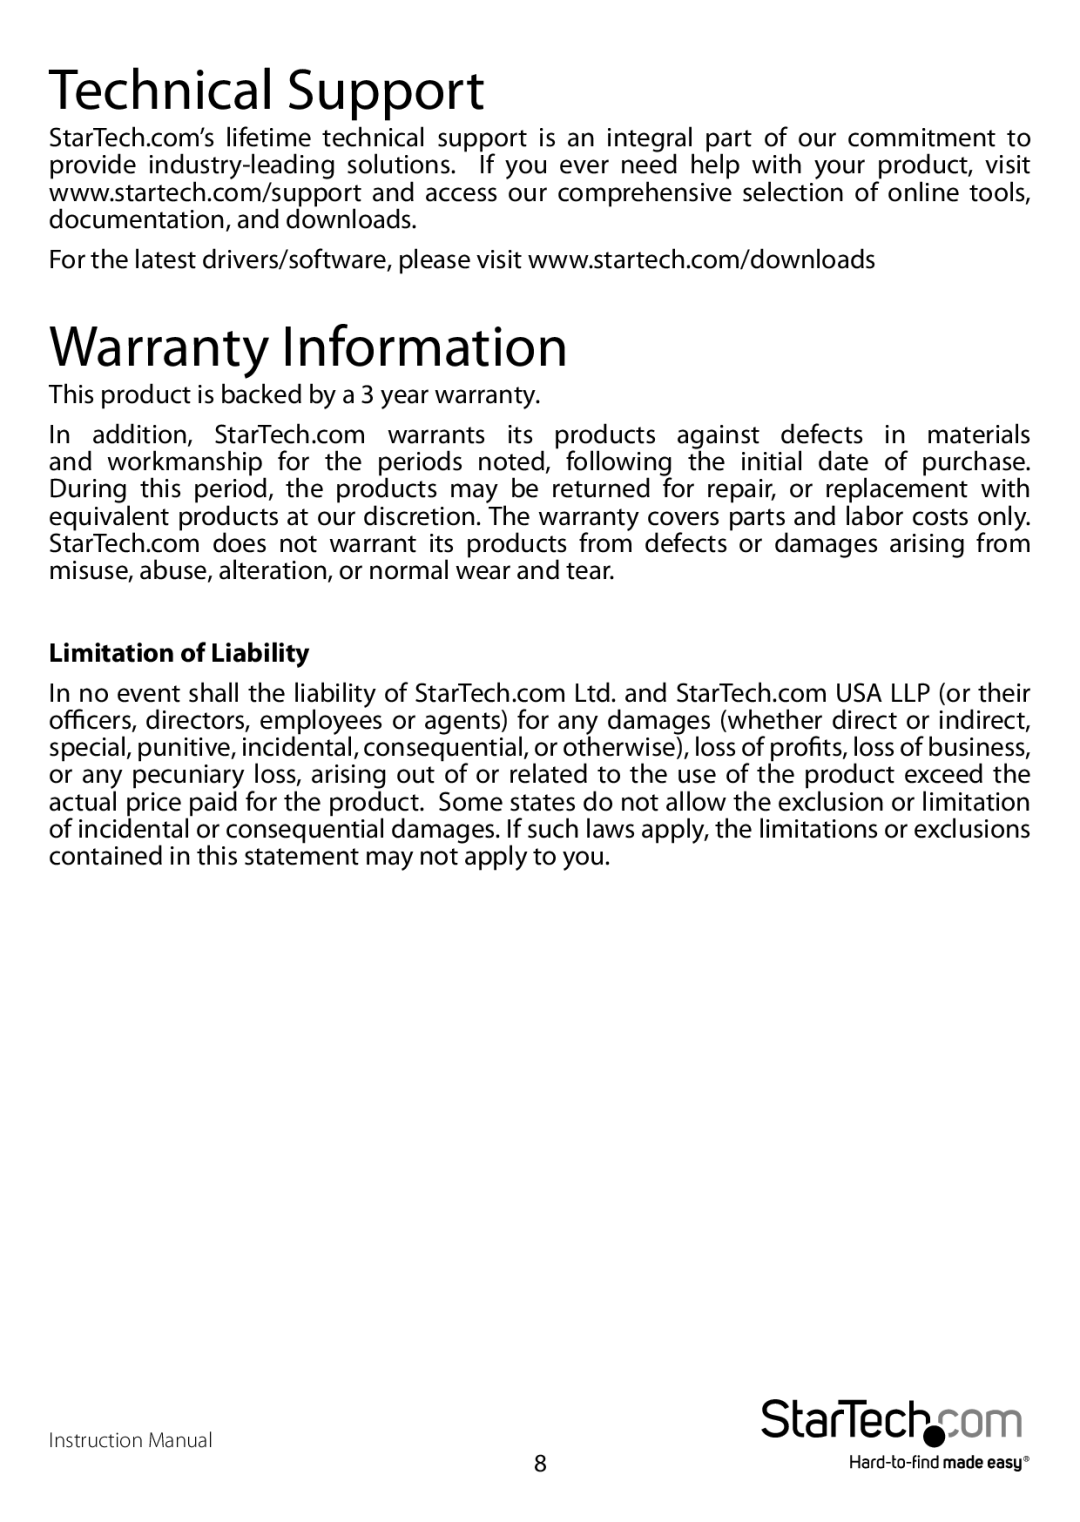 StarTech.com Sv231 manual Technical Support, Warranty Information, Limitation of Liability 